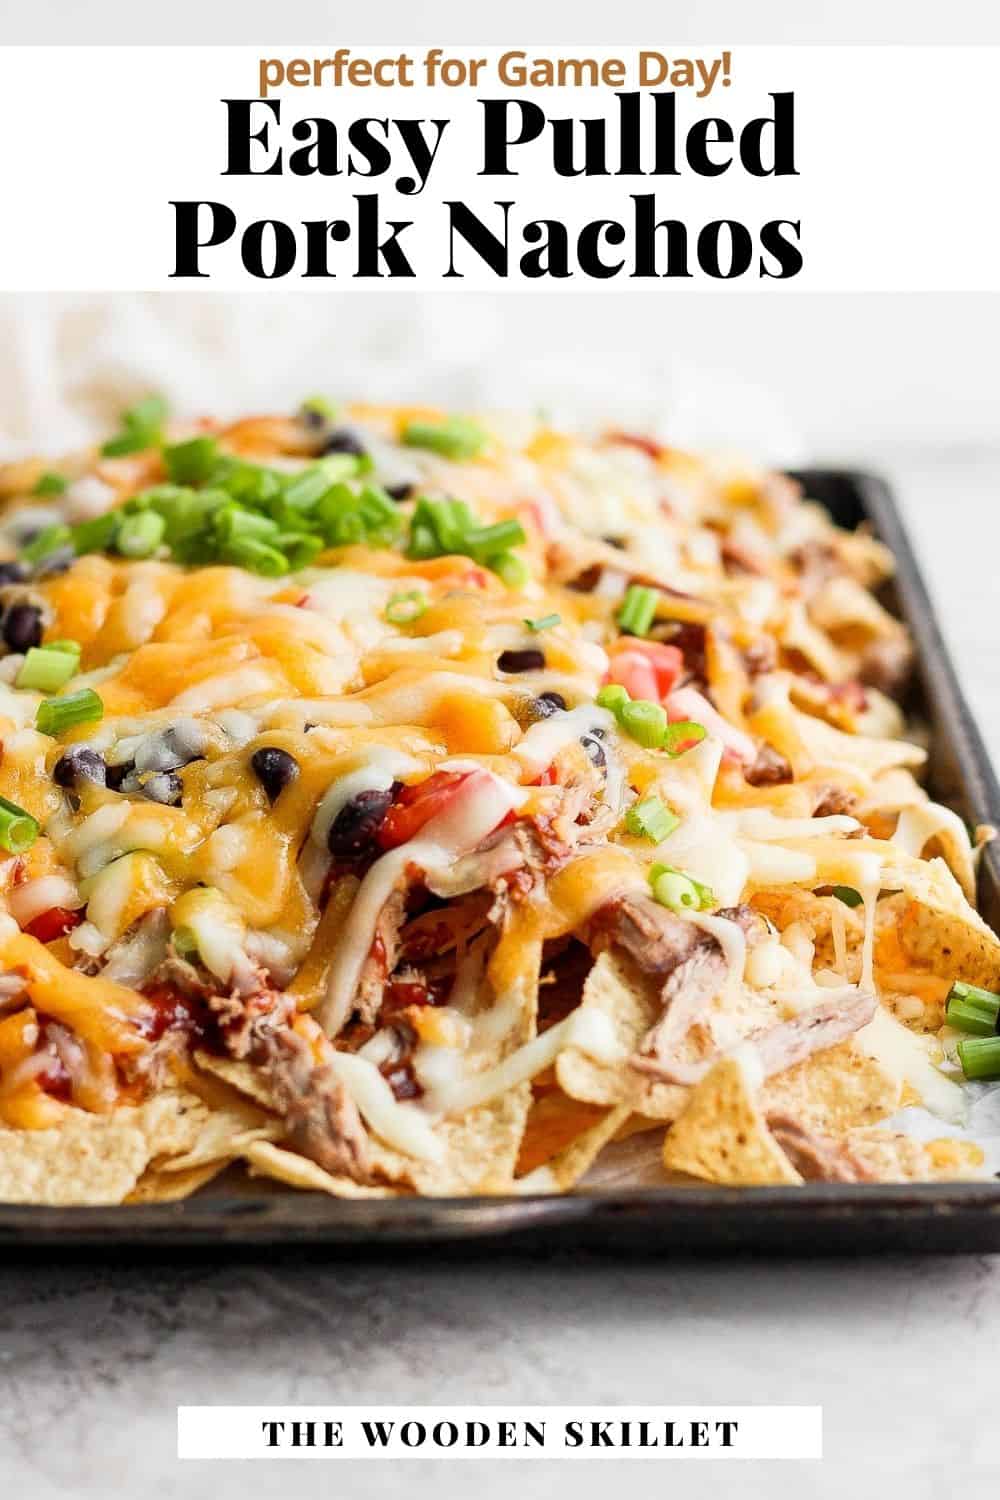 Pinterest image for pulled pork nachos.